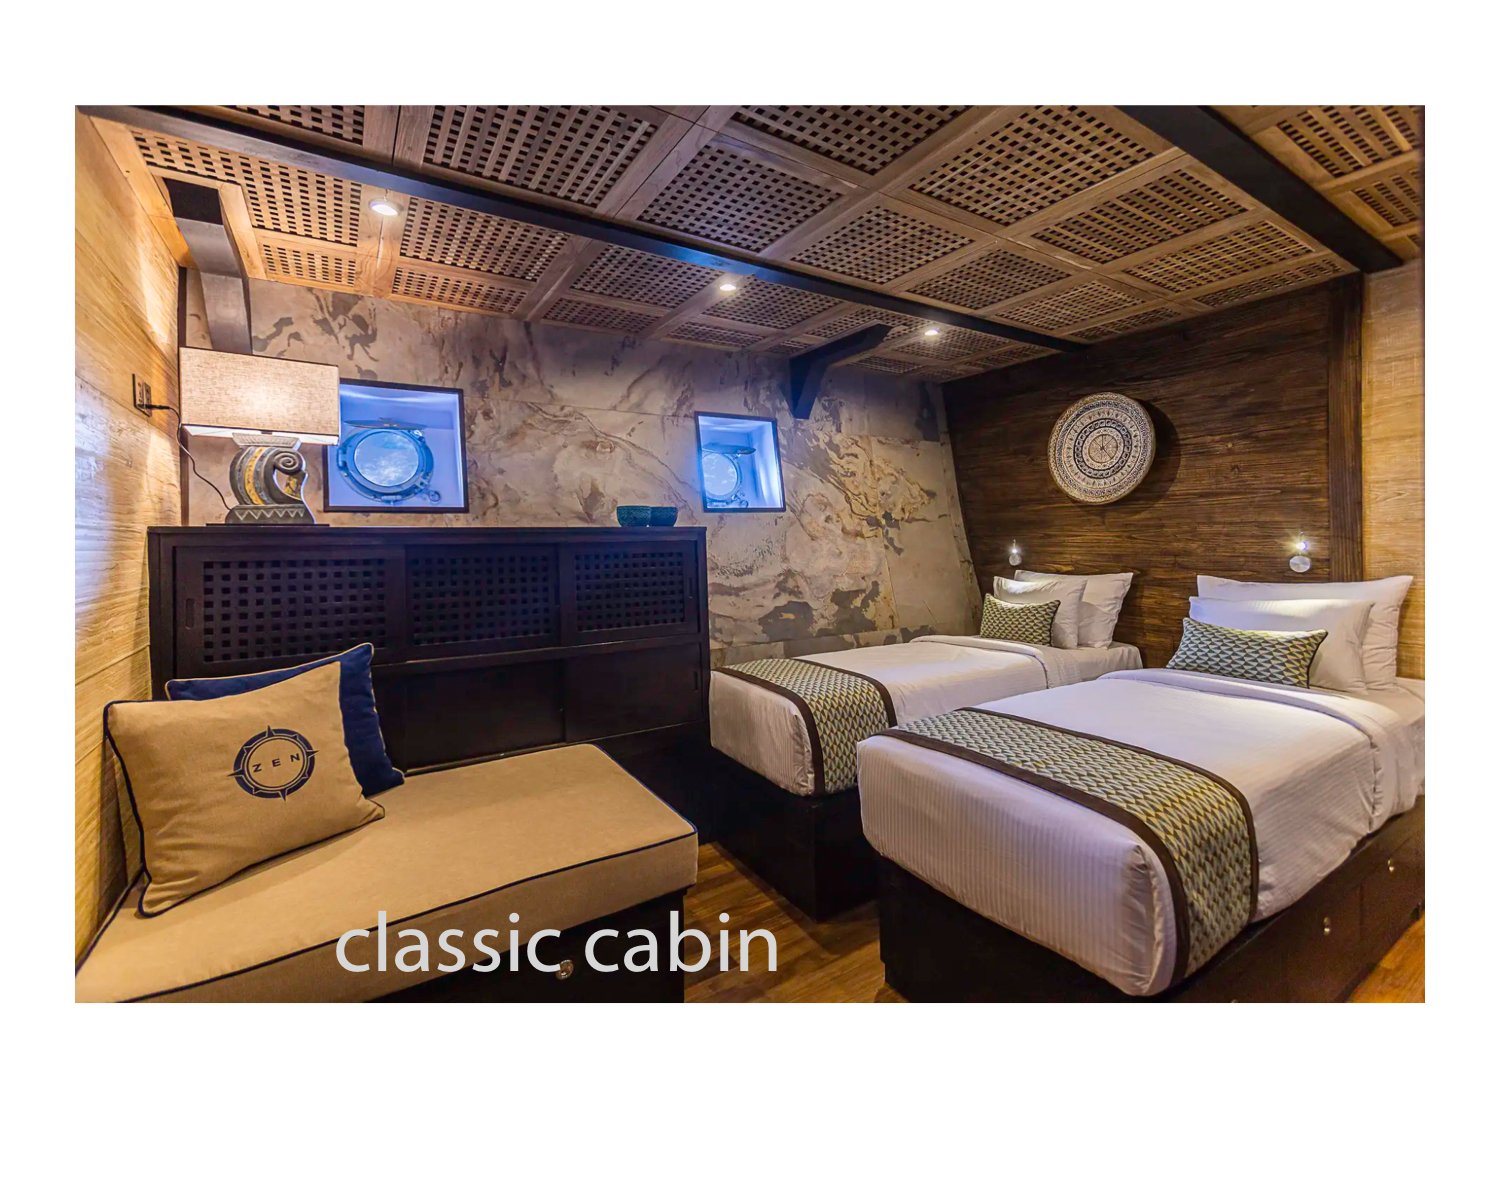 spice island_luxurious_classic cabin_02.jpg